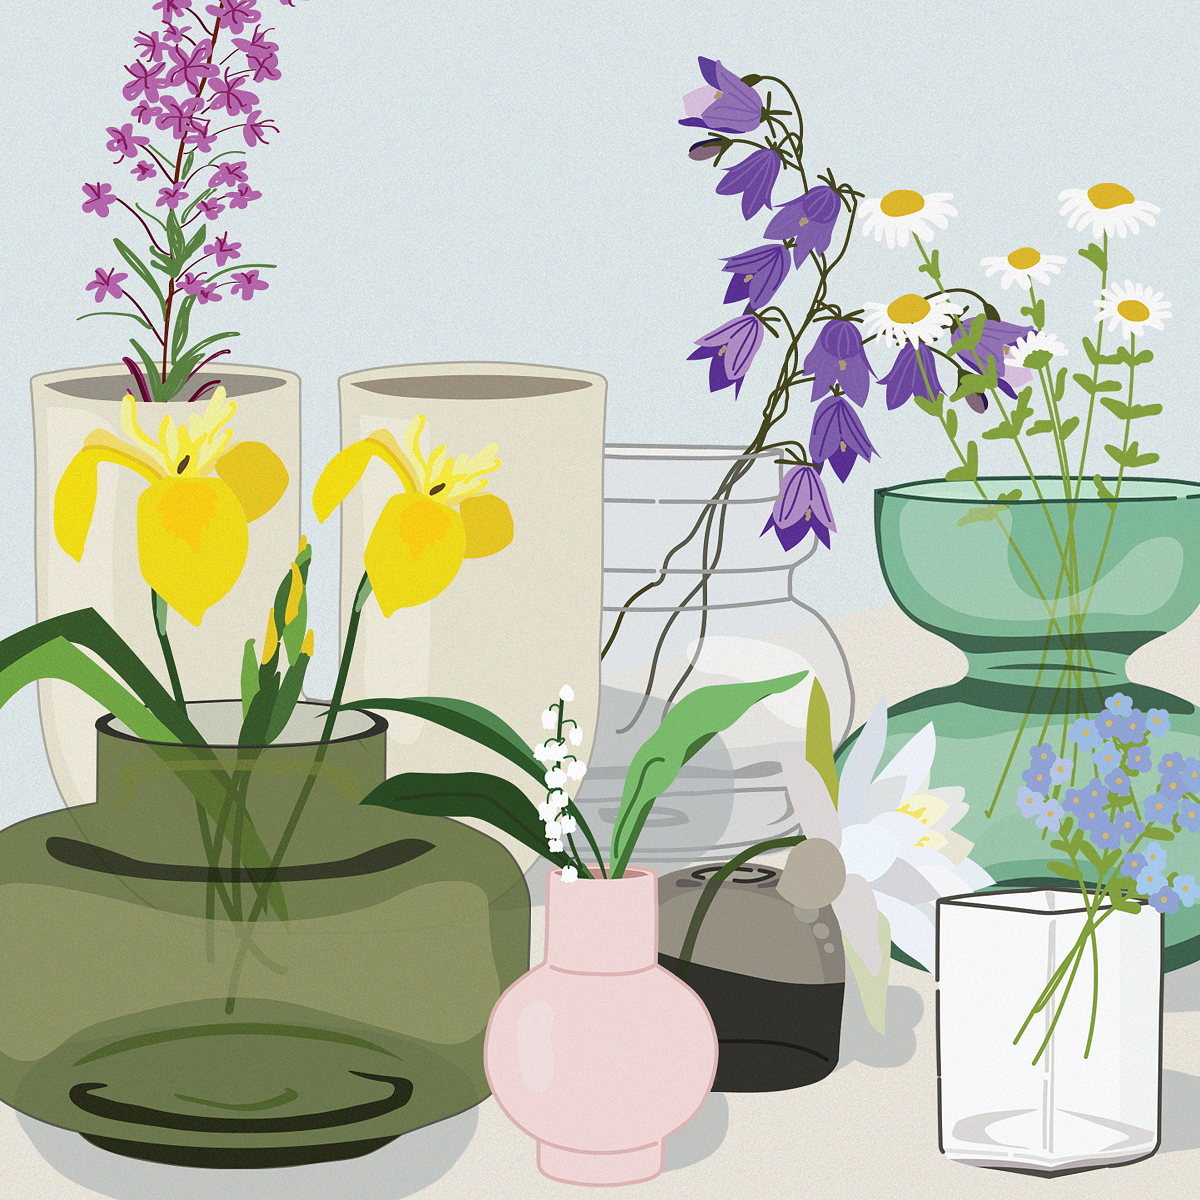 Midsummer flower vases